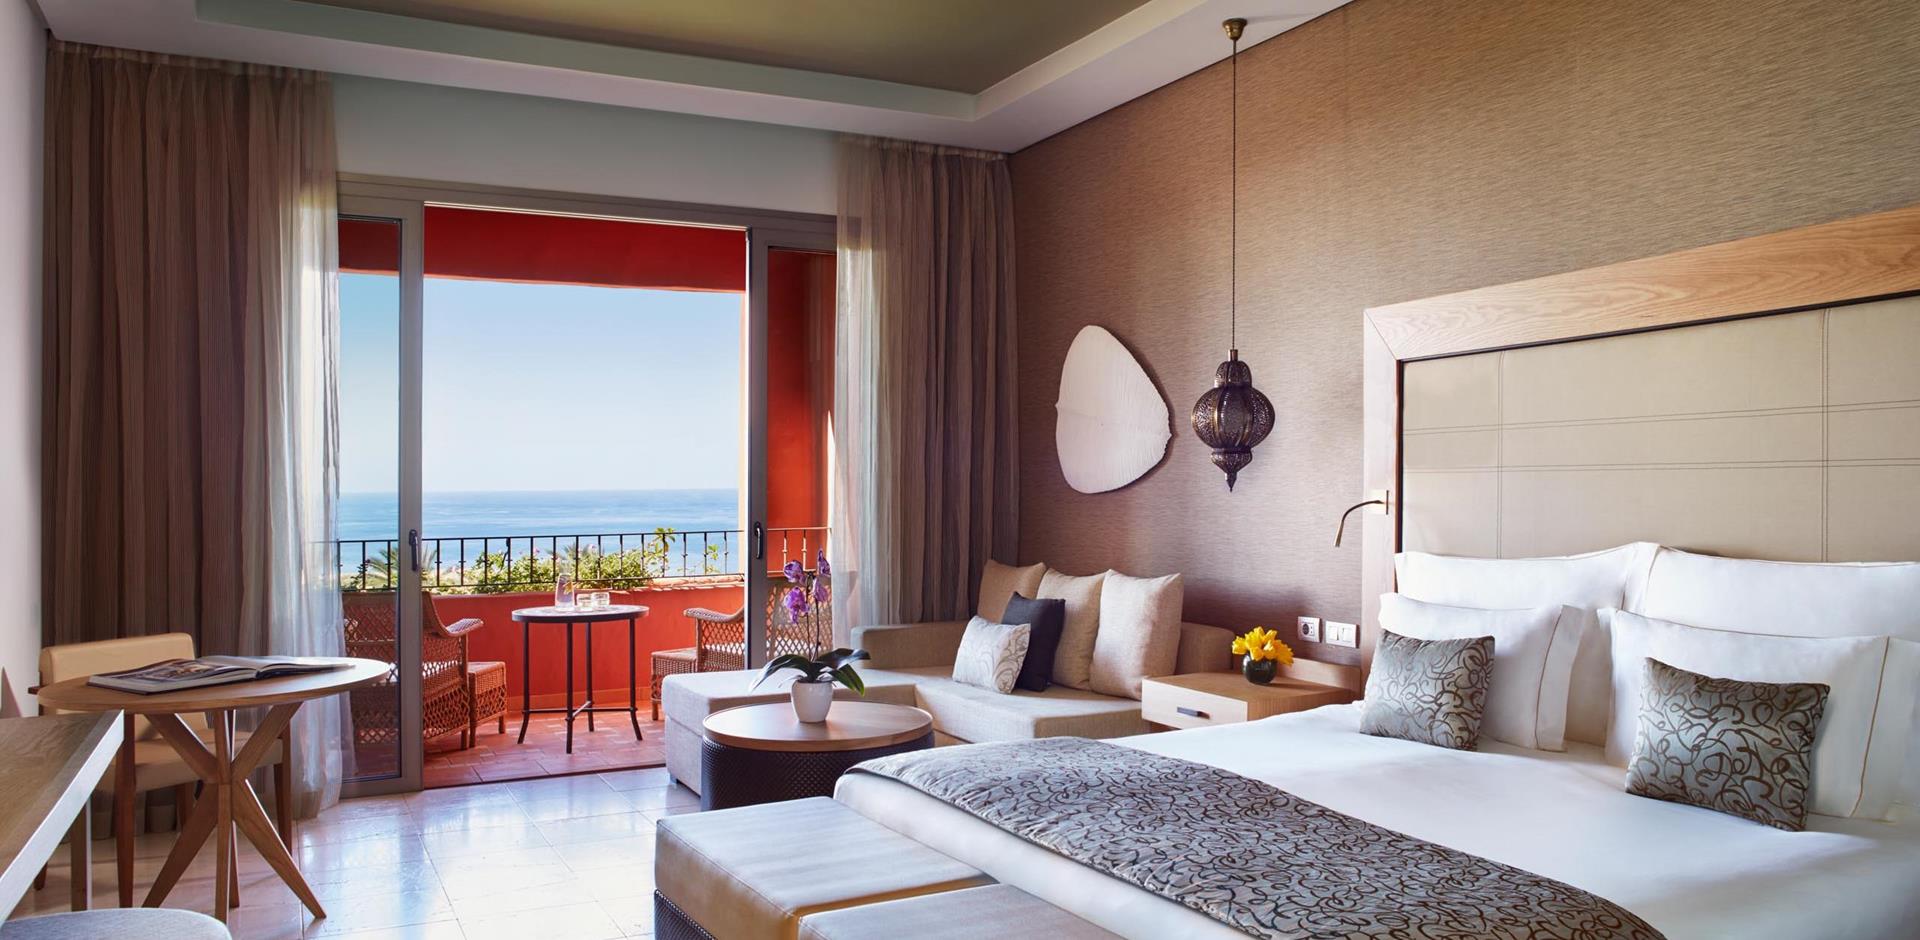 Citadel deluxe room, ocean view, The Ritz-Carlton Tenerife, Abama, Spain